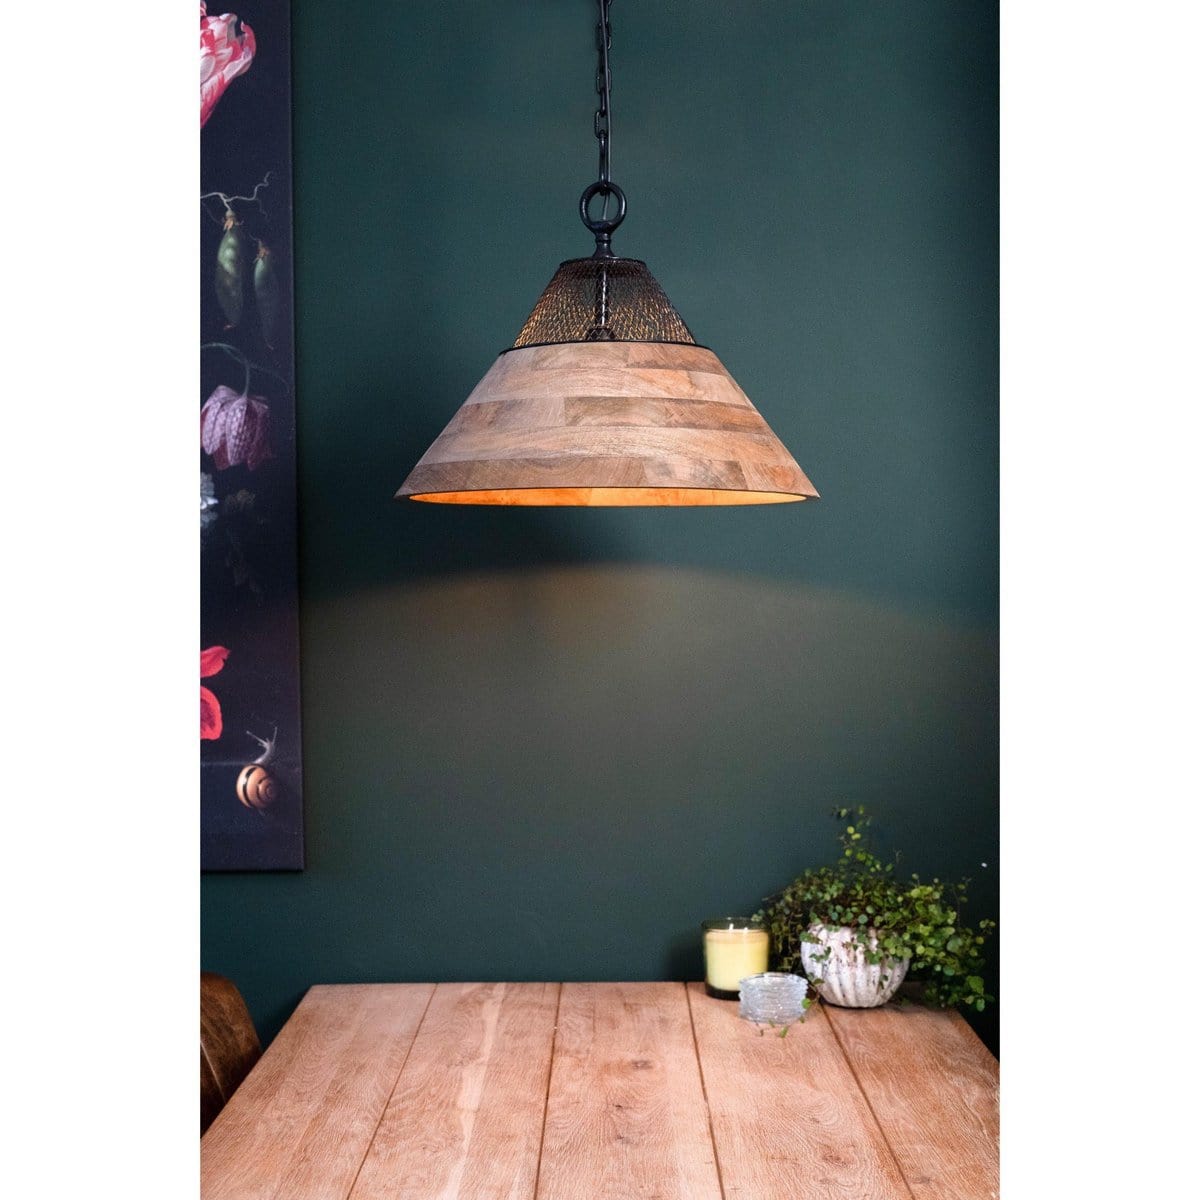 1304 Design Hanglamp TONY naturel hout+mat zwart Ø50x30cm